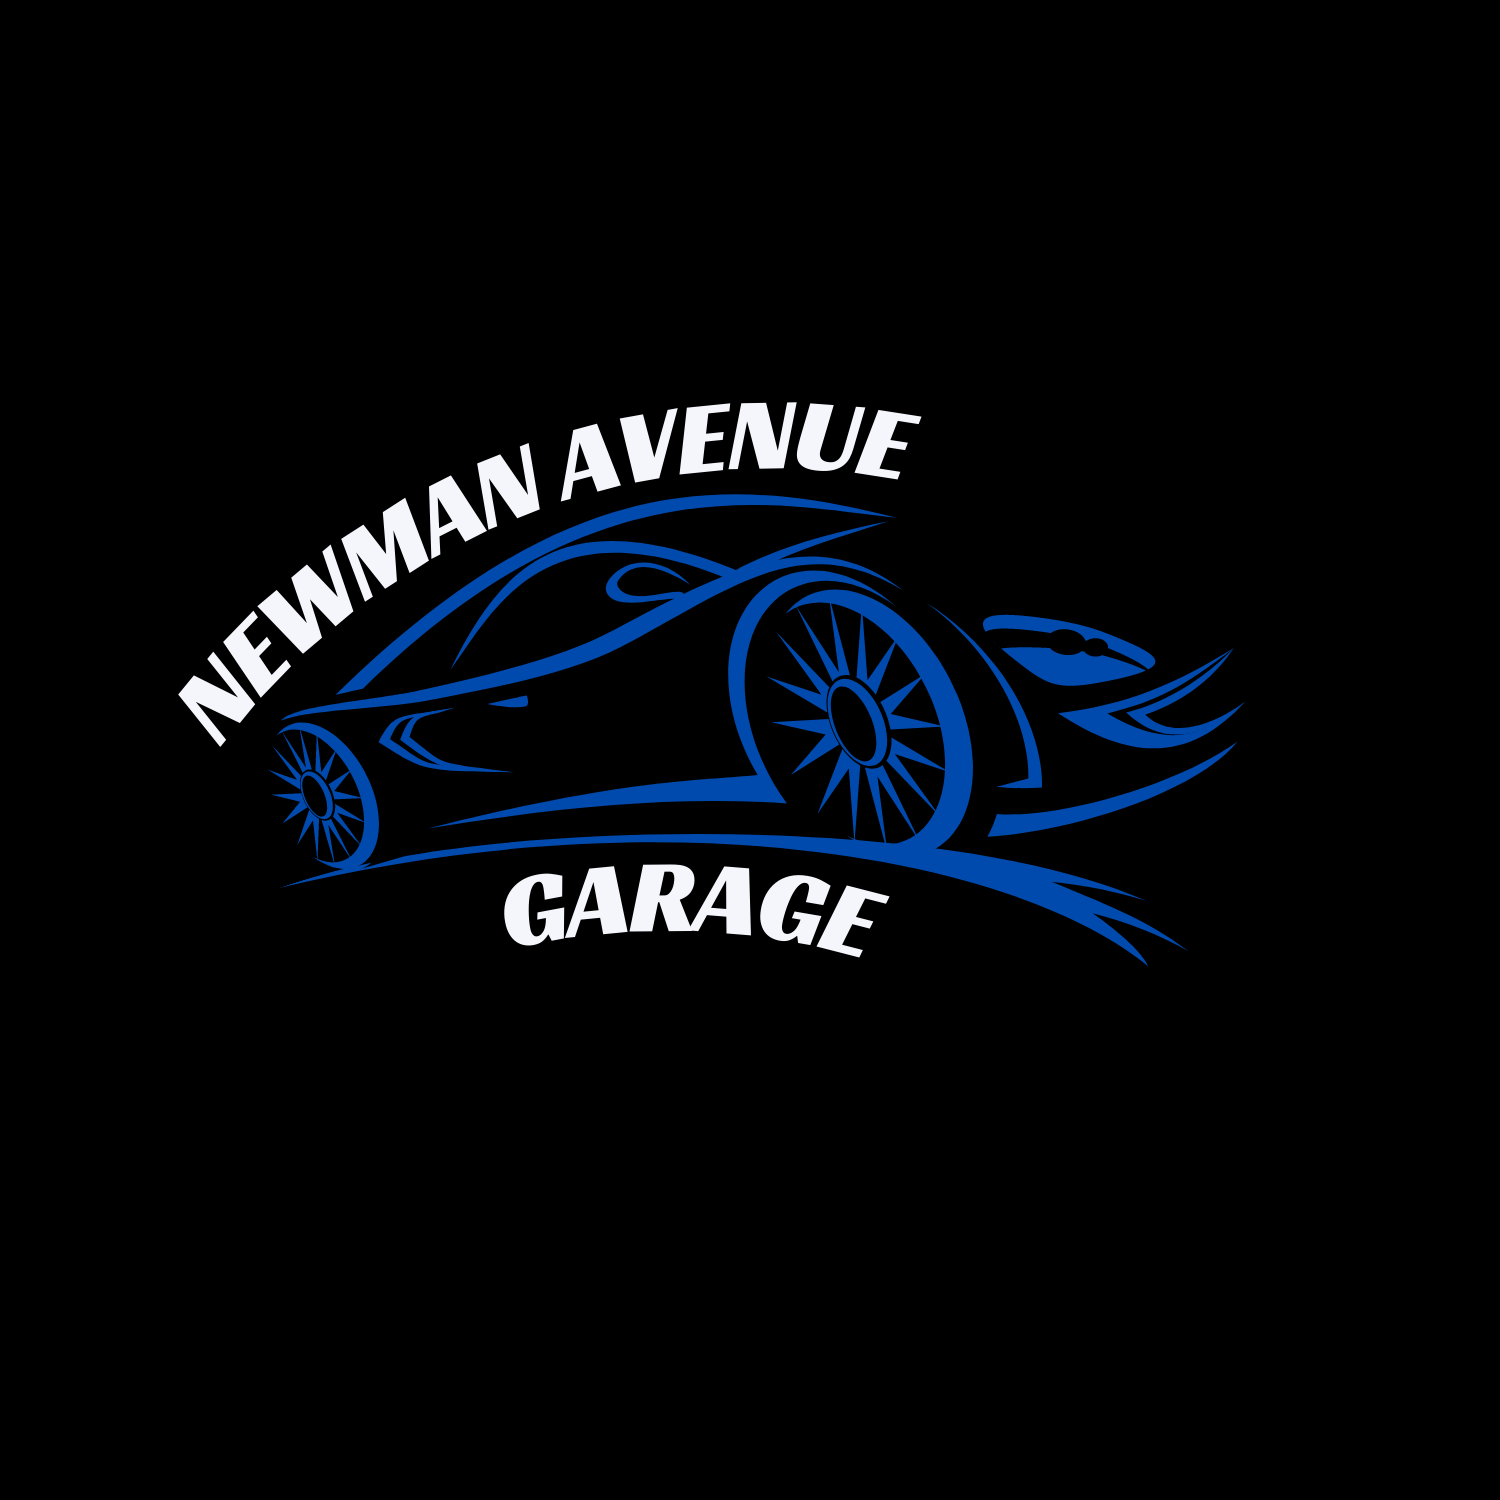 Newman Avenue Garage & Exhausts Logo